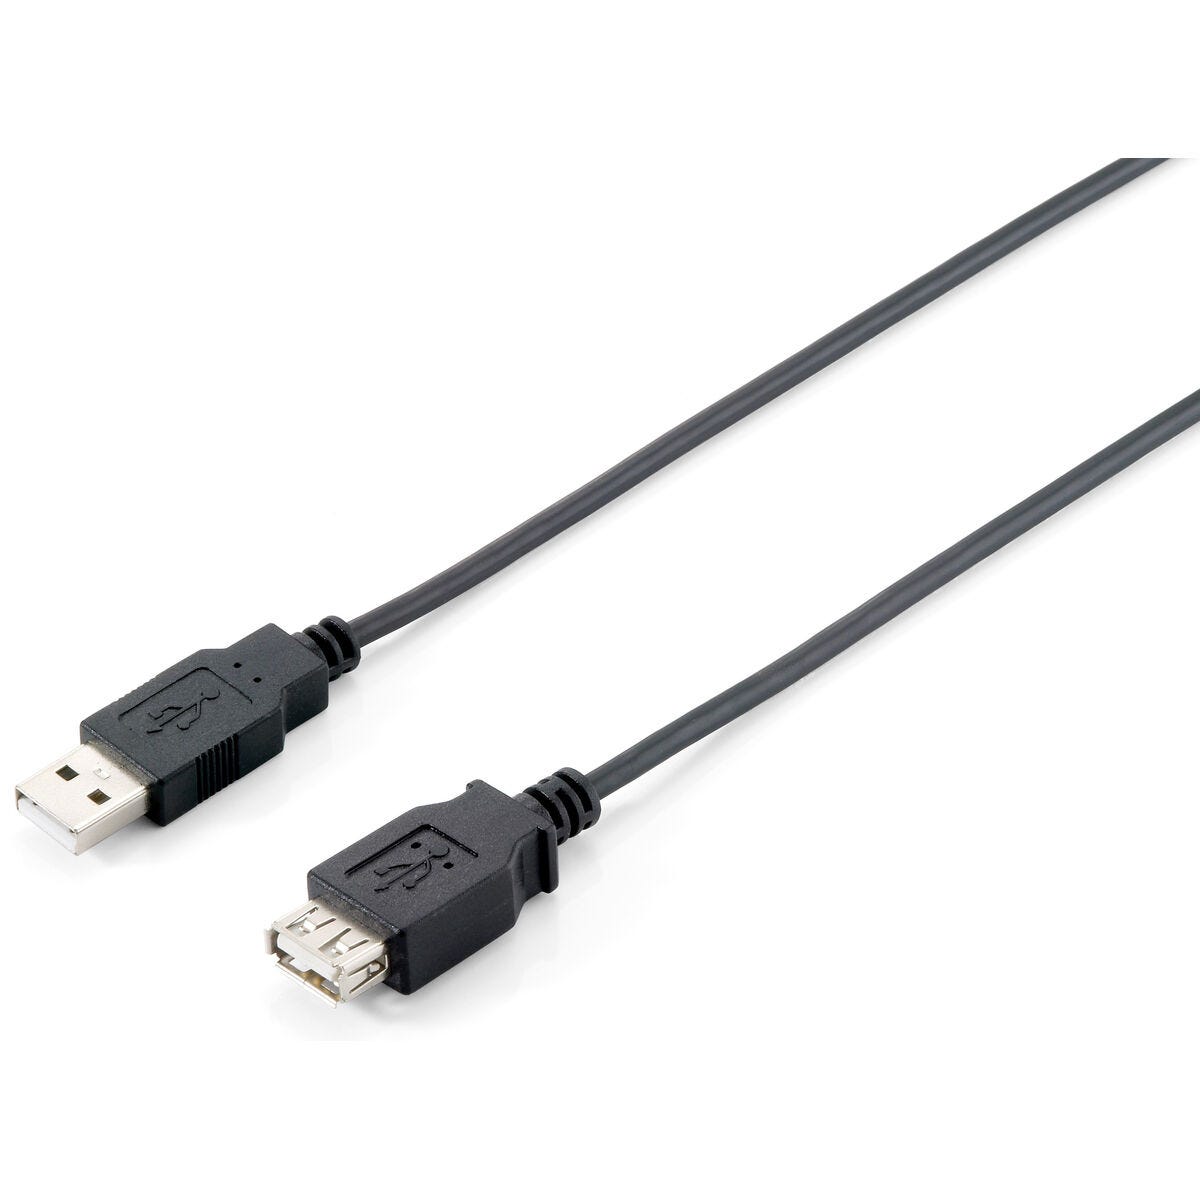 CABLE ALARGADOR USB 1M - Comprar en DF Cell Store